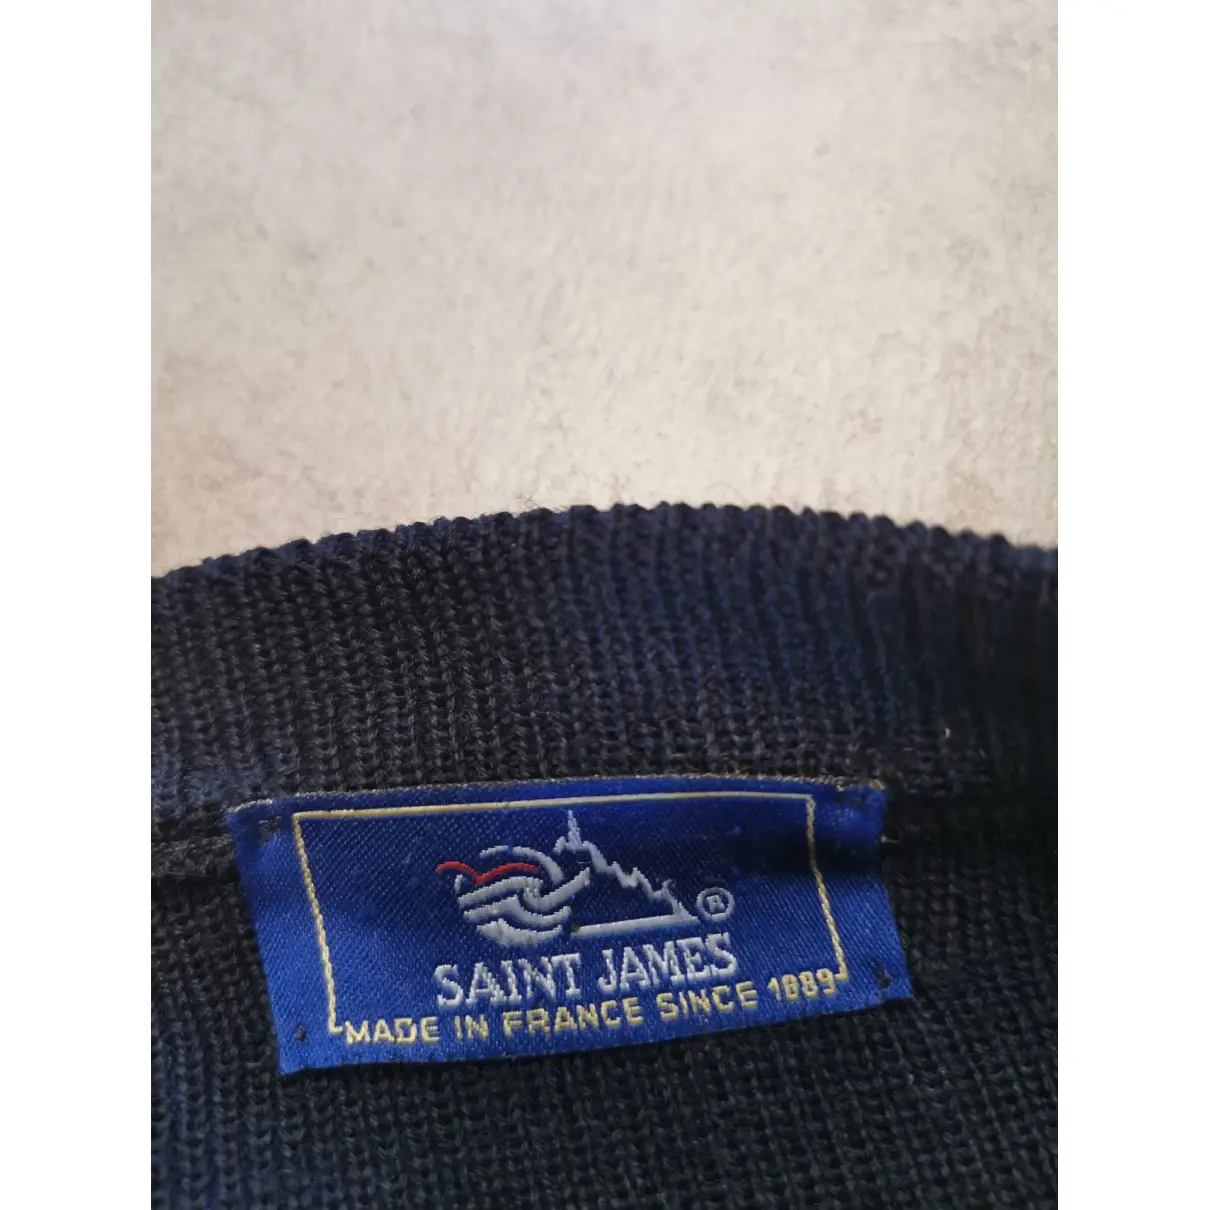 Buy Saint James Wool suit jacket online